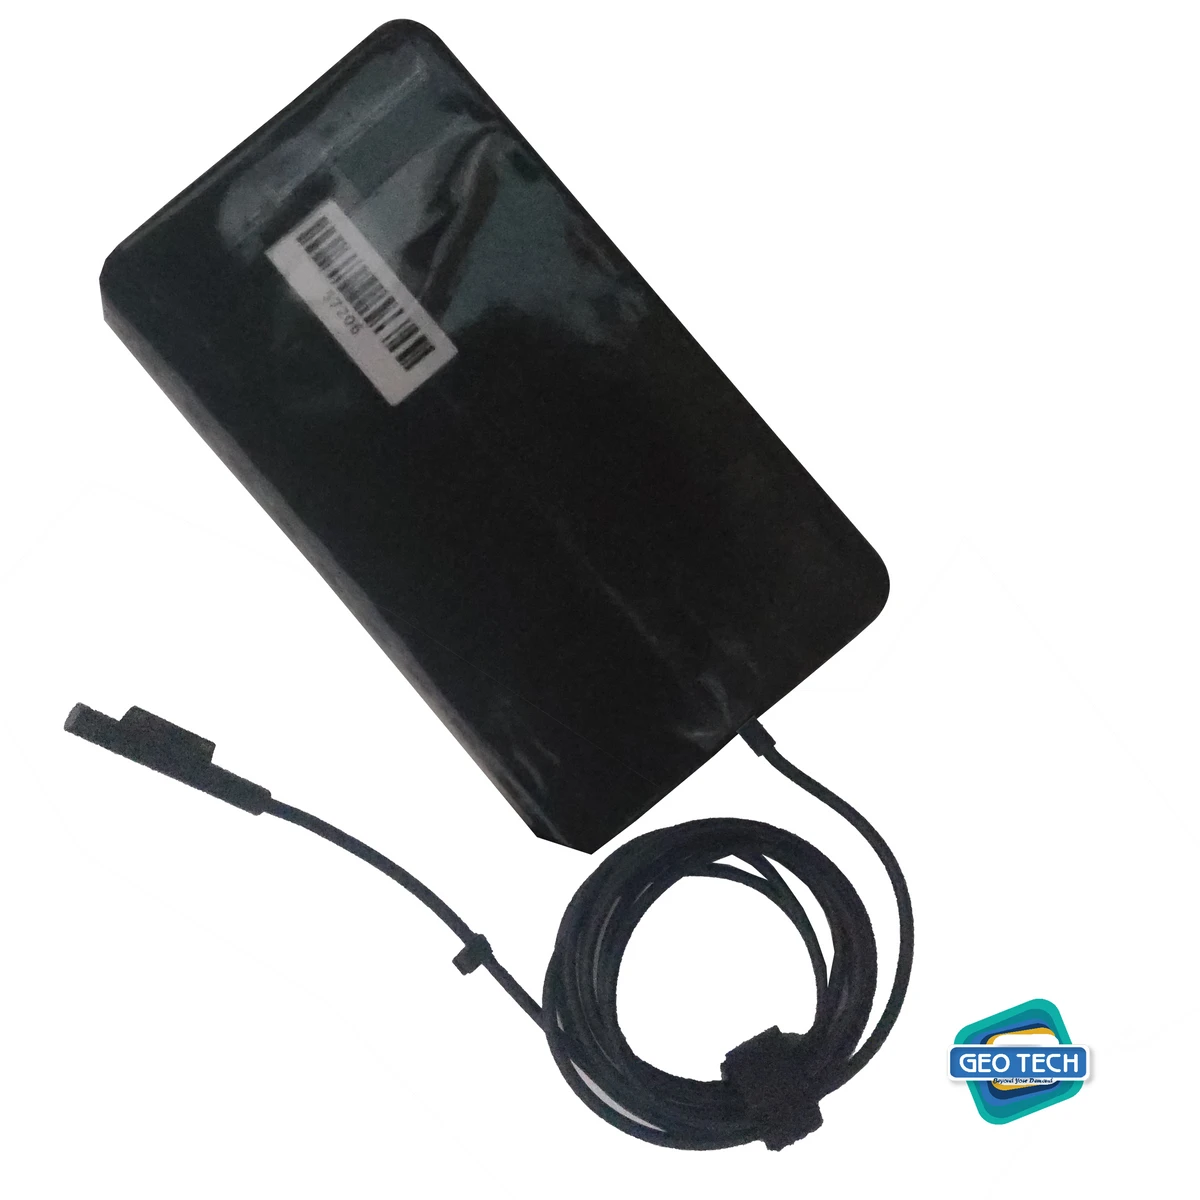 Original 36W 12V 2.58A Adapter Charger Compatible with Microsoft Surface Pro3 Pro 3 4 i5 i7 1625 AC Power Supply 5V 1A USB Port EU US Plug